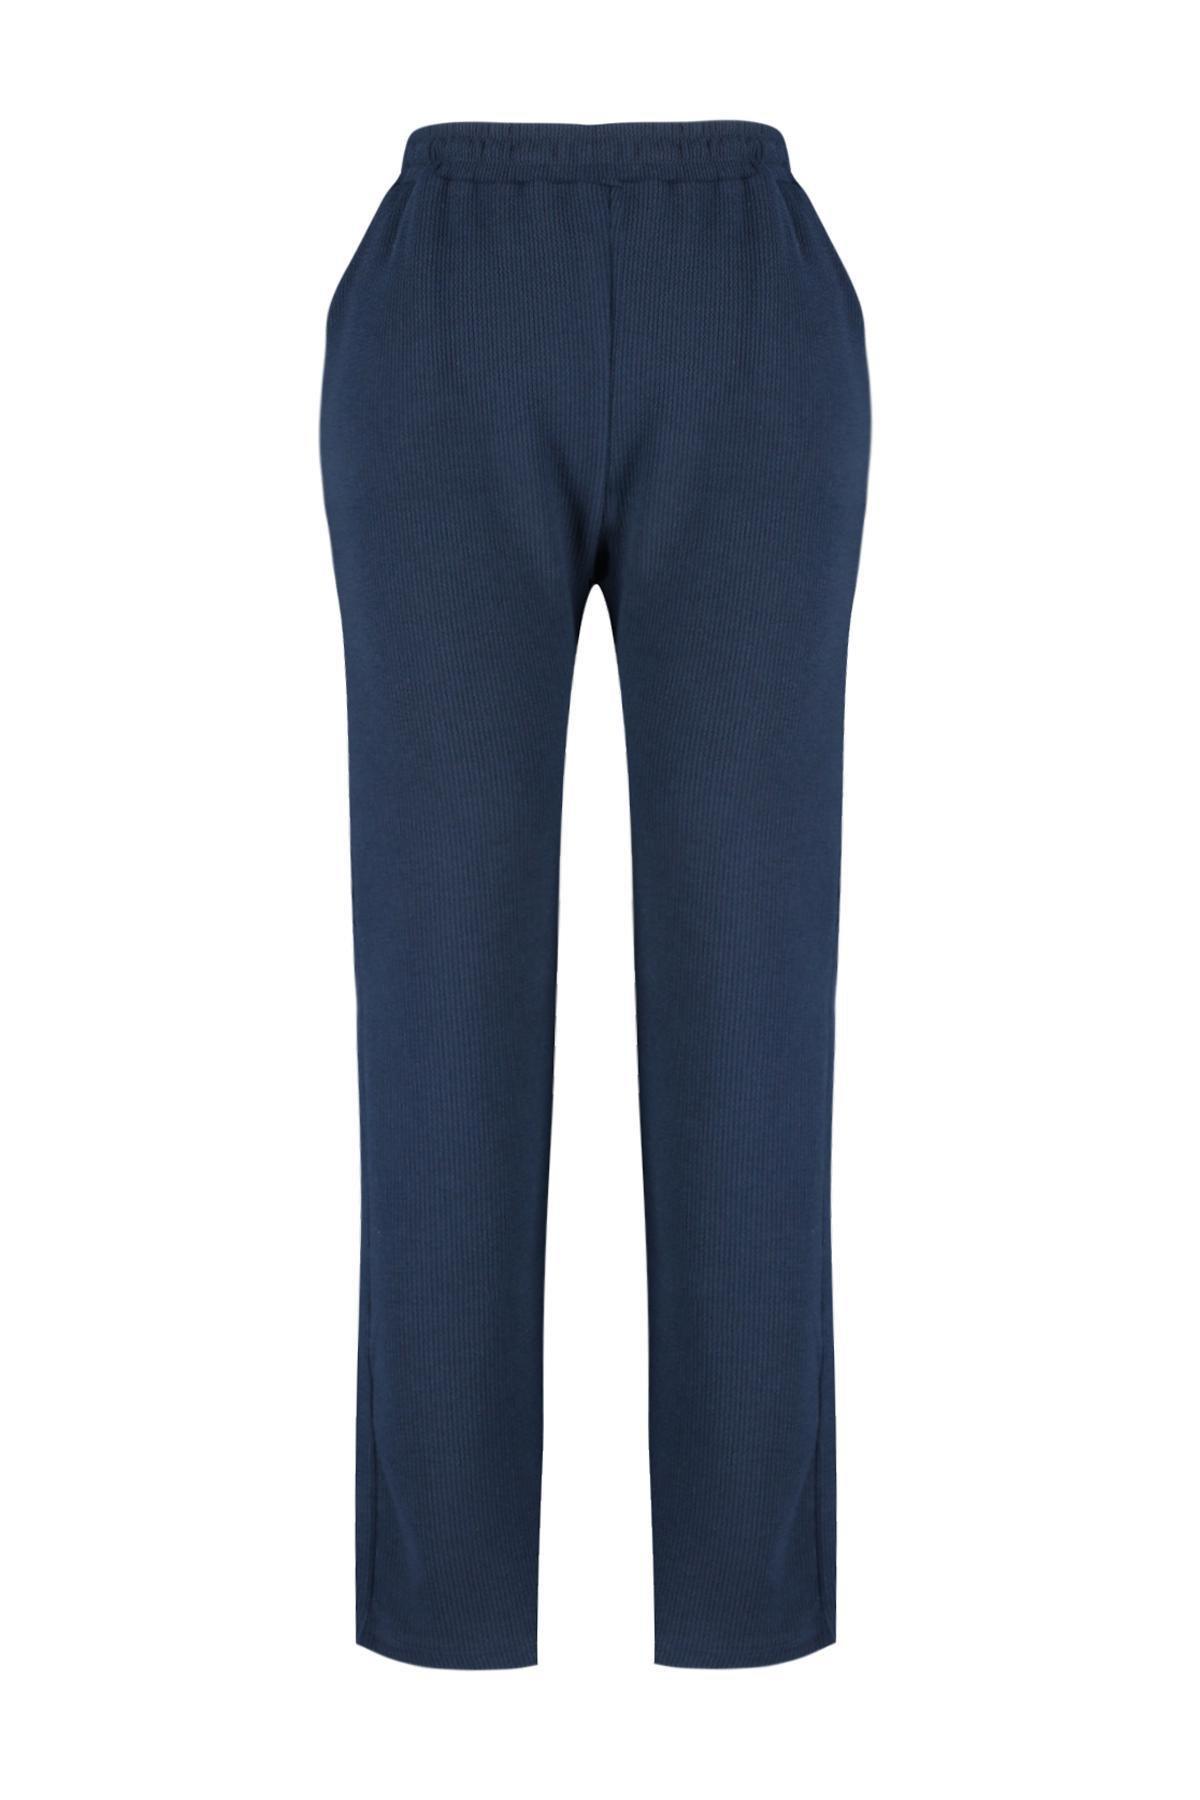 Trendyol - Blue Crepe Knit Sweatpants